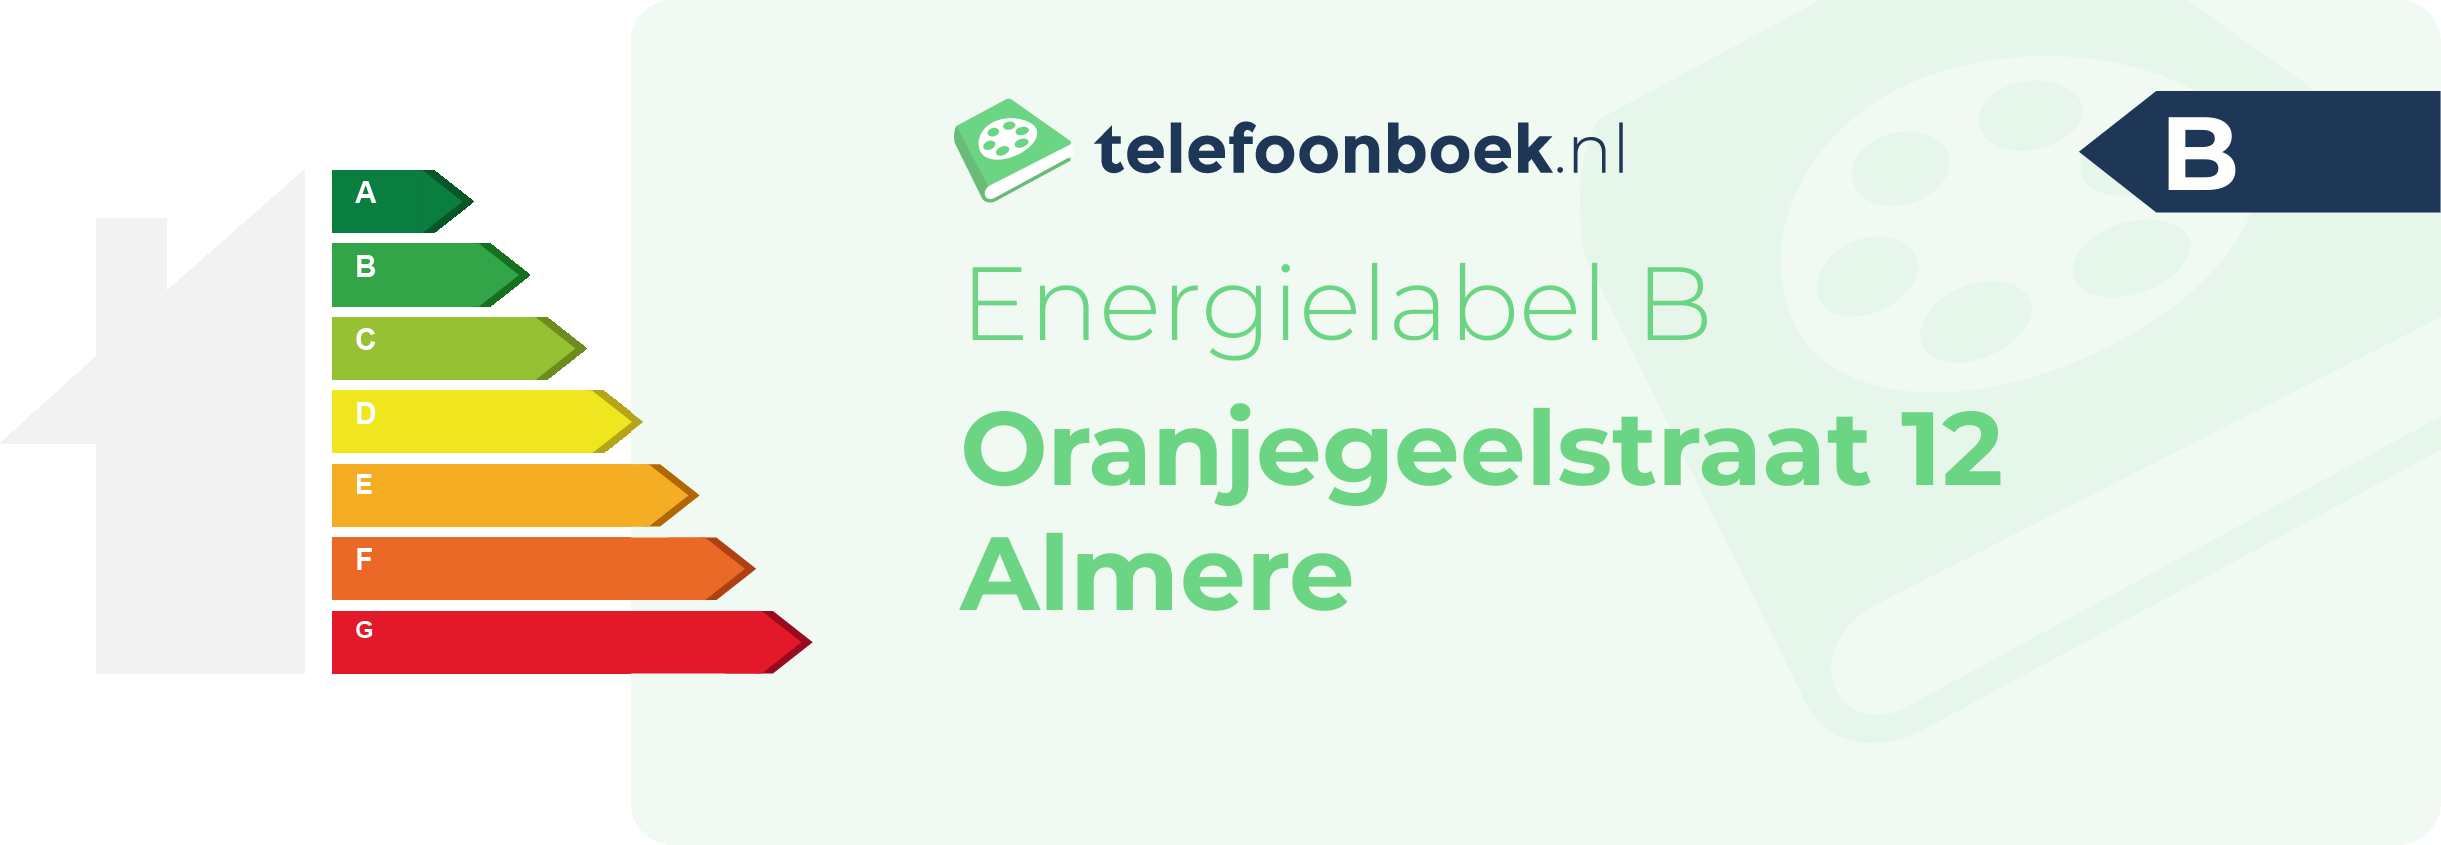 Energielabel Oranjegeelstraat 12 Almere